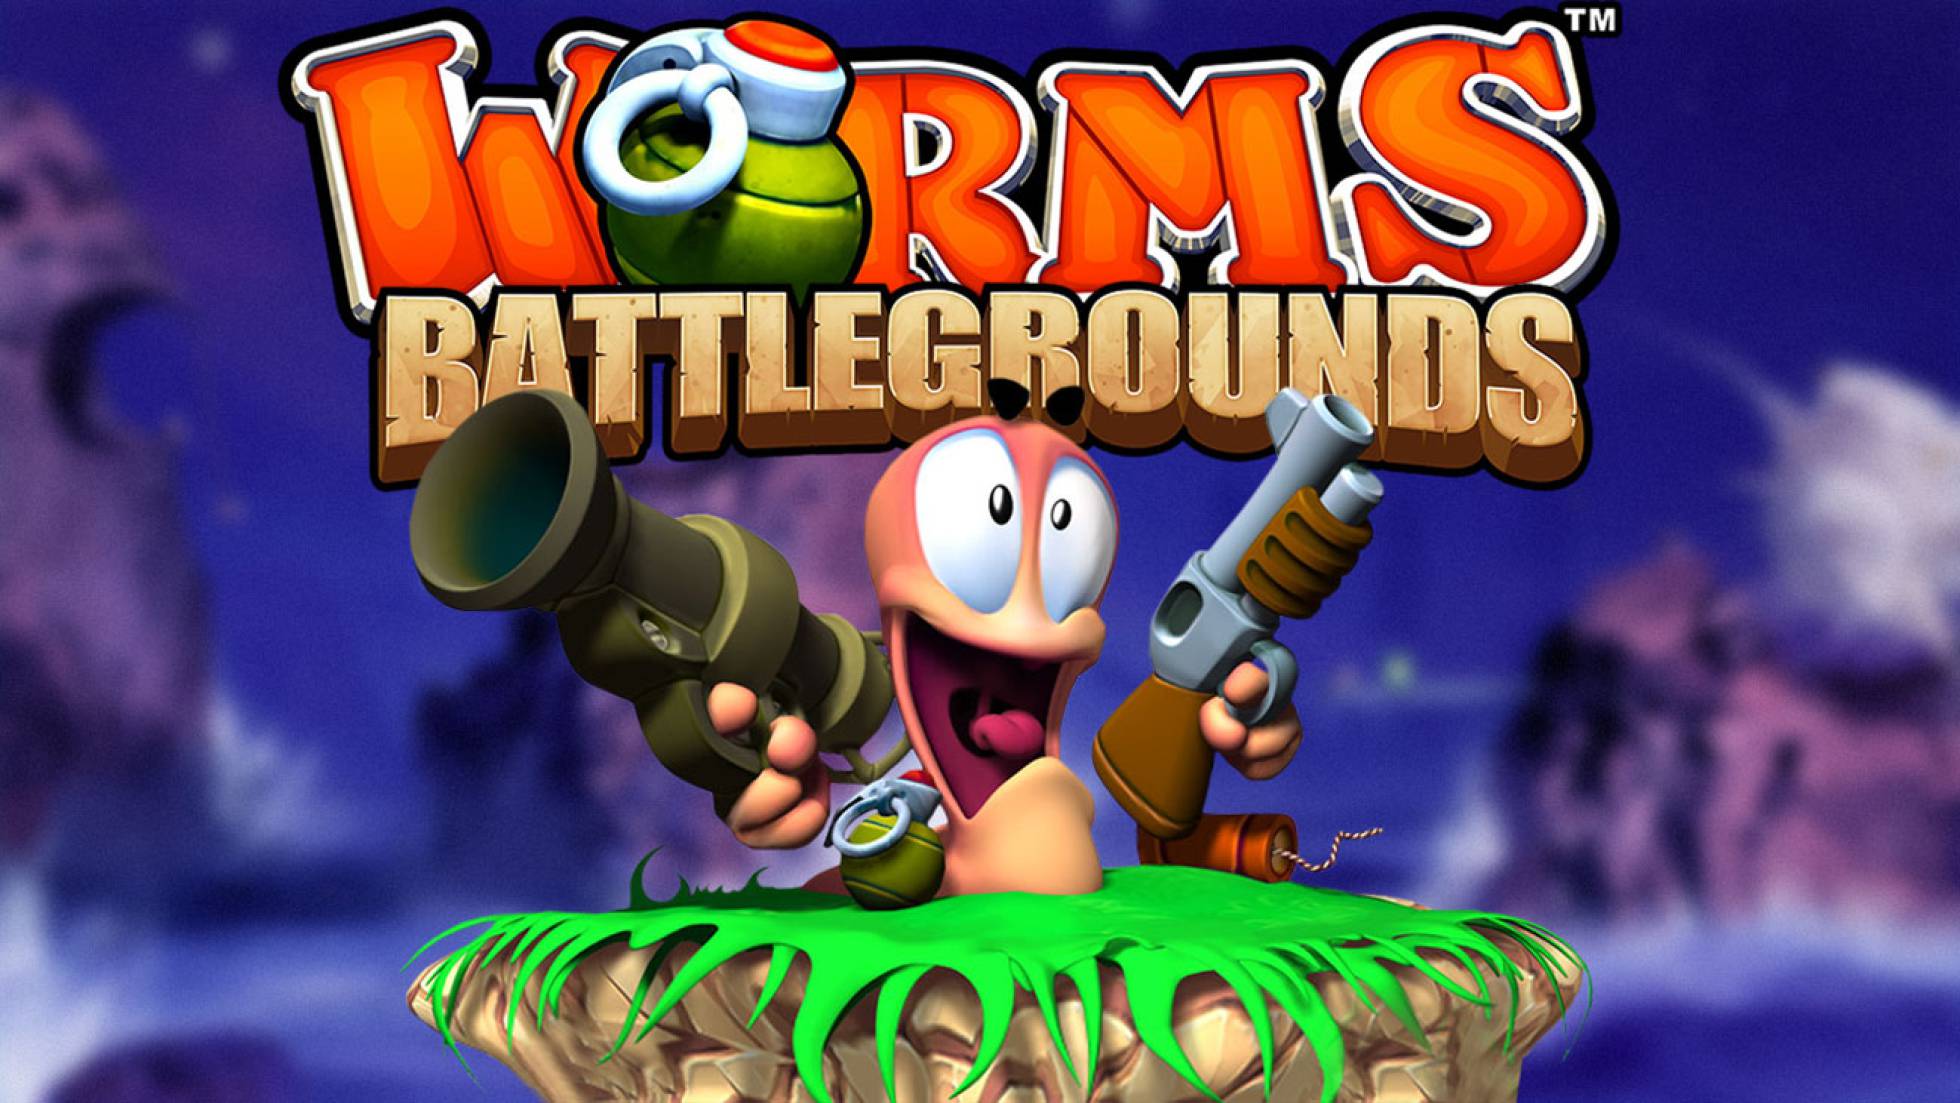 Worms gameplay. Игра вормс червячки. Вормс на пс4. Worms ps4. Worms Battlegrounds.